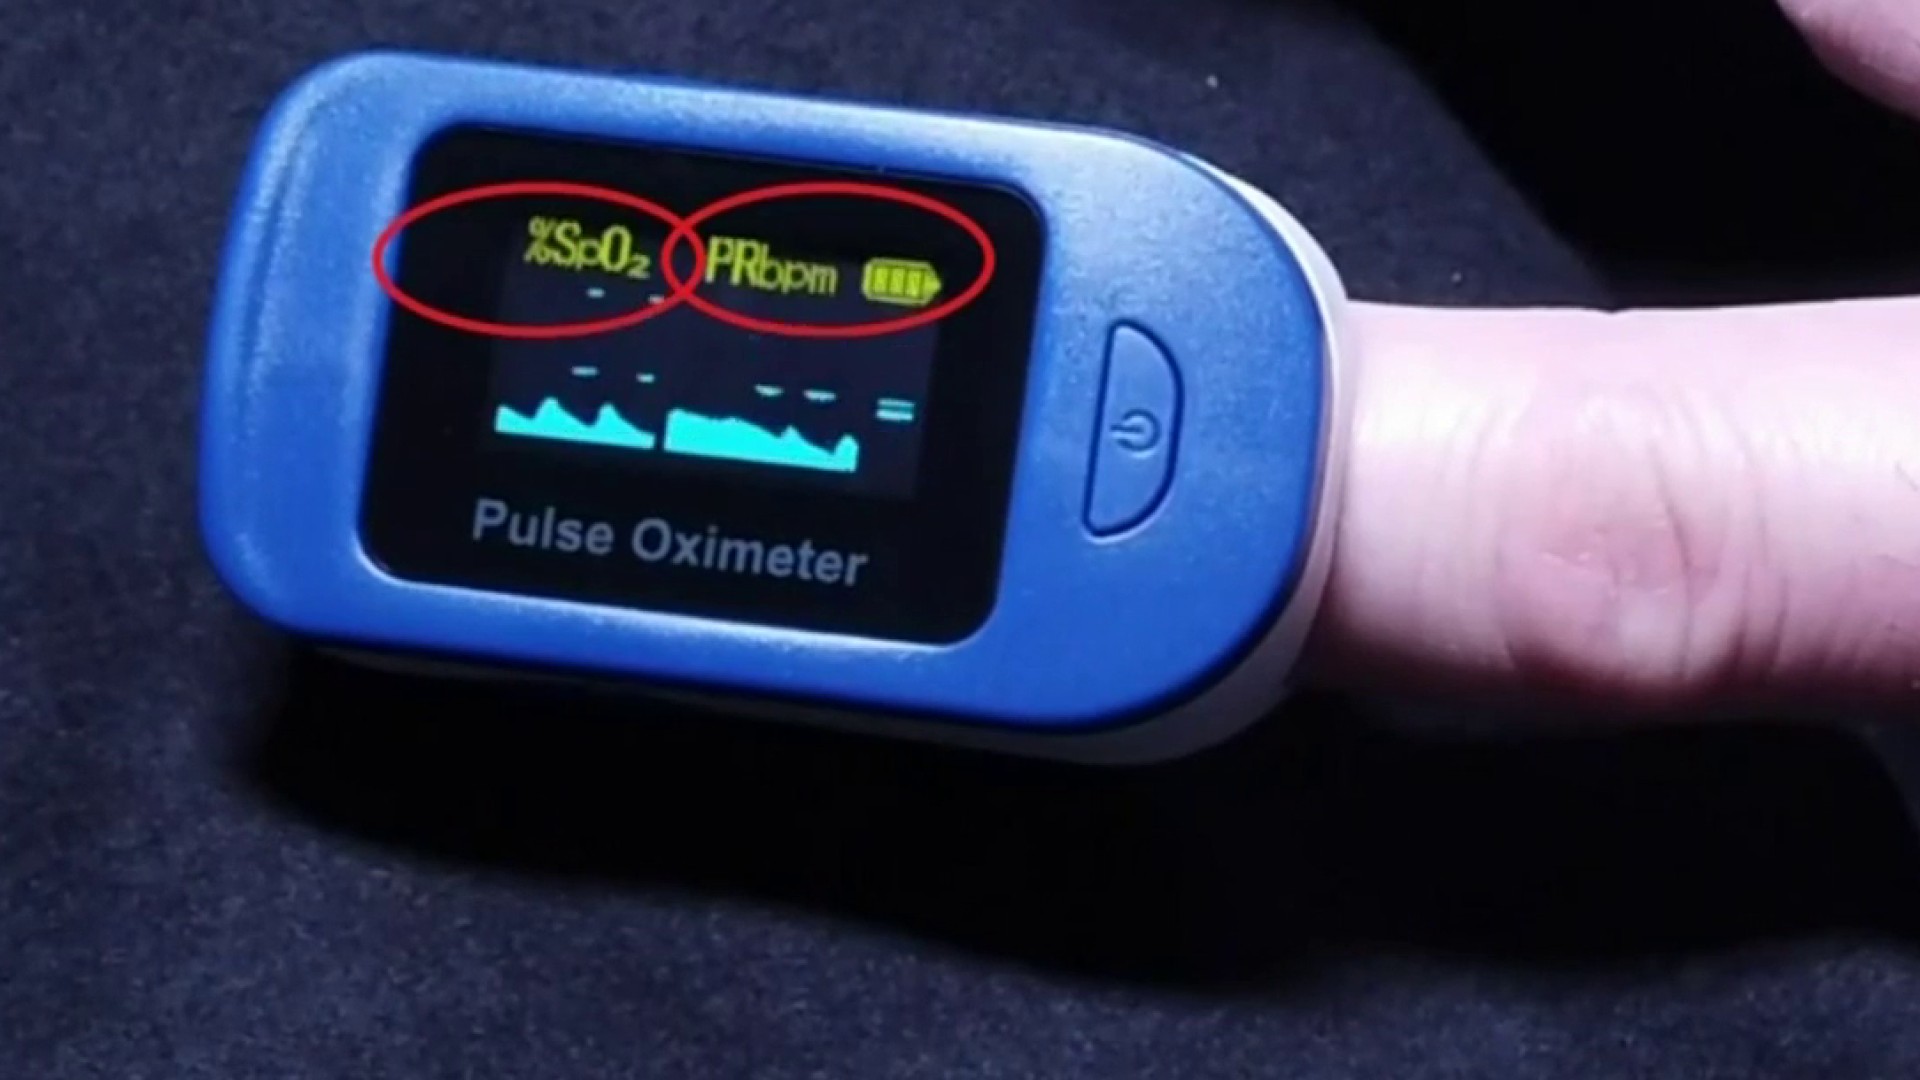 Pulse oximeter reading